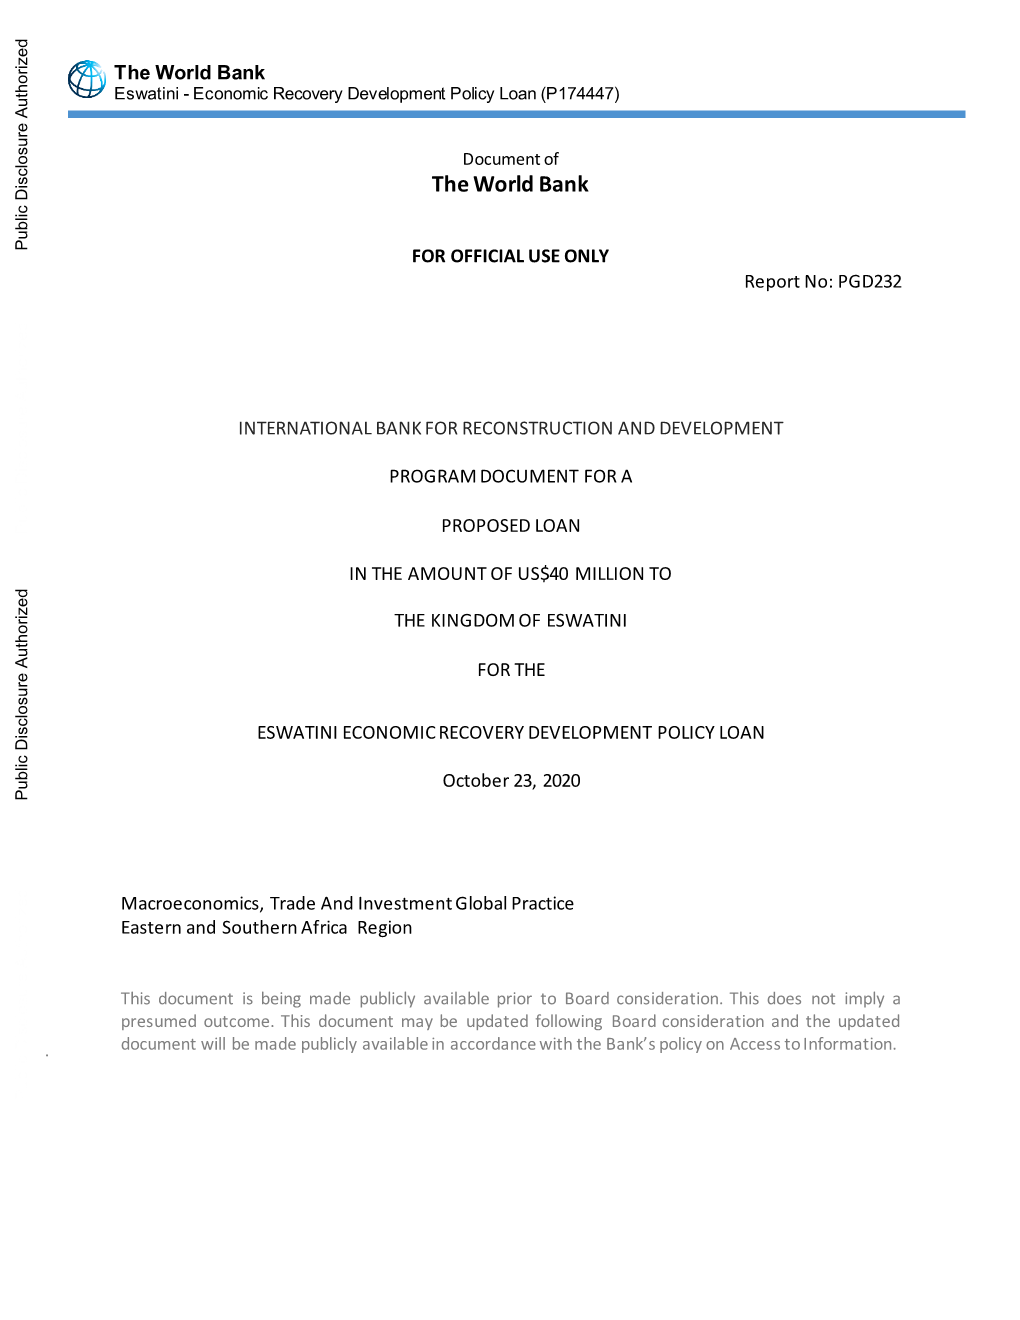 The World Bank Eswatini - Economic Recovery Development Policy Loan (P174447)